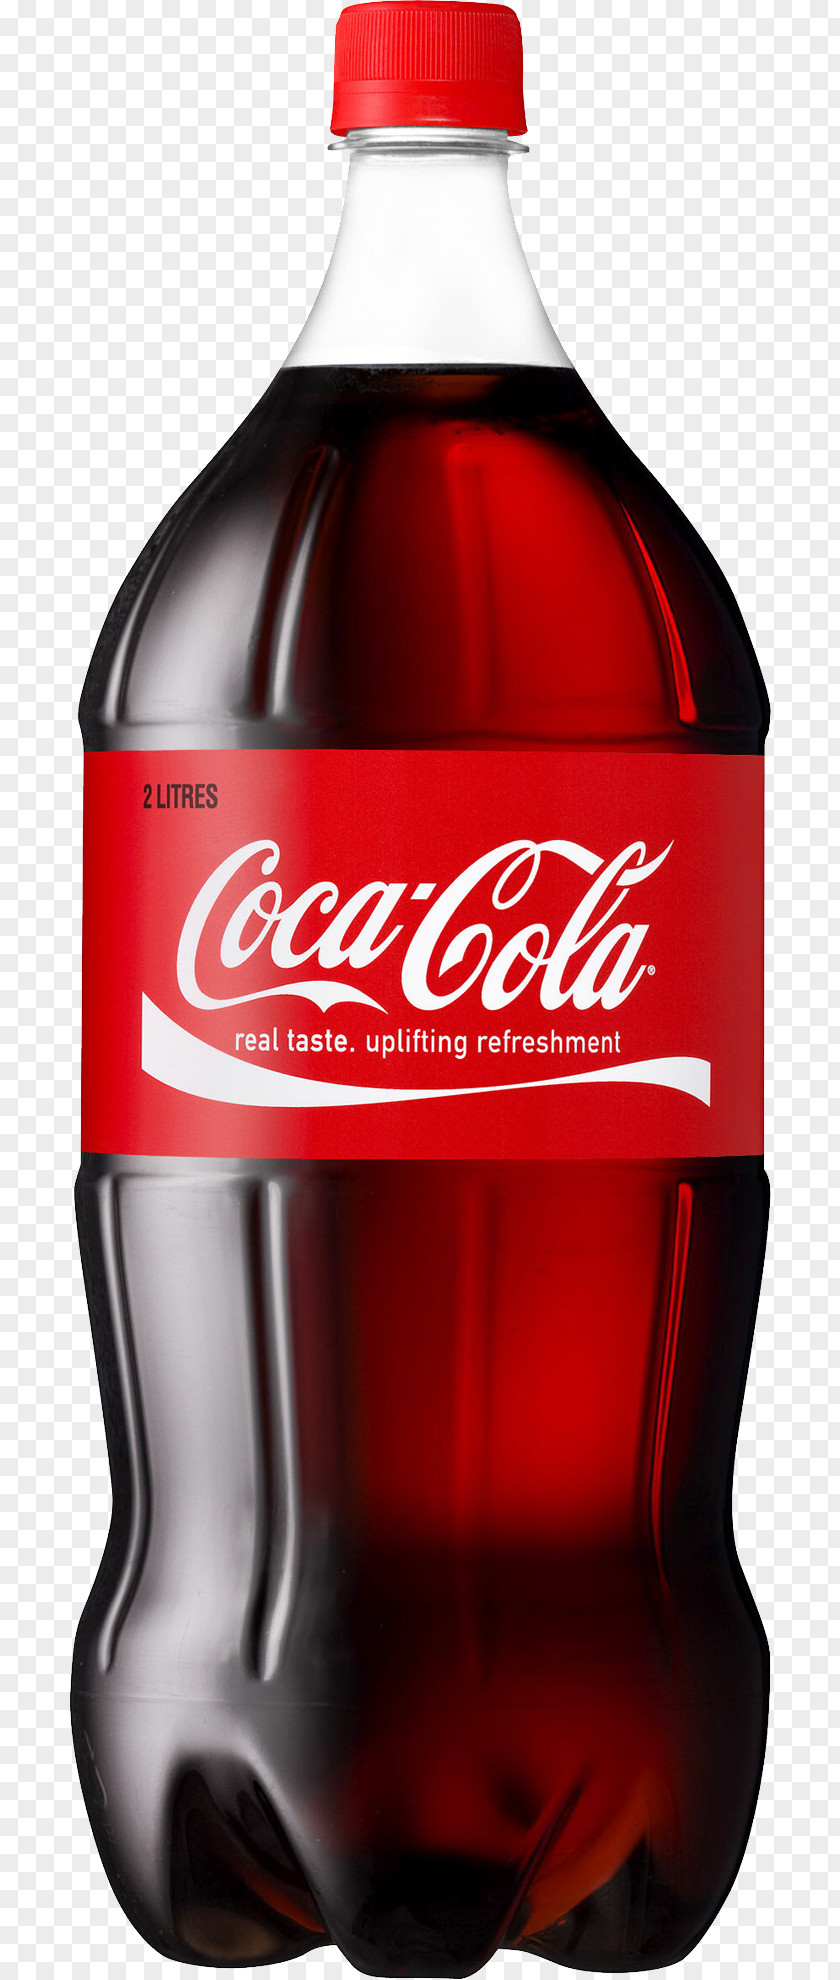 Coca Cola Bottle Image PNG